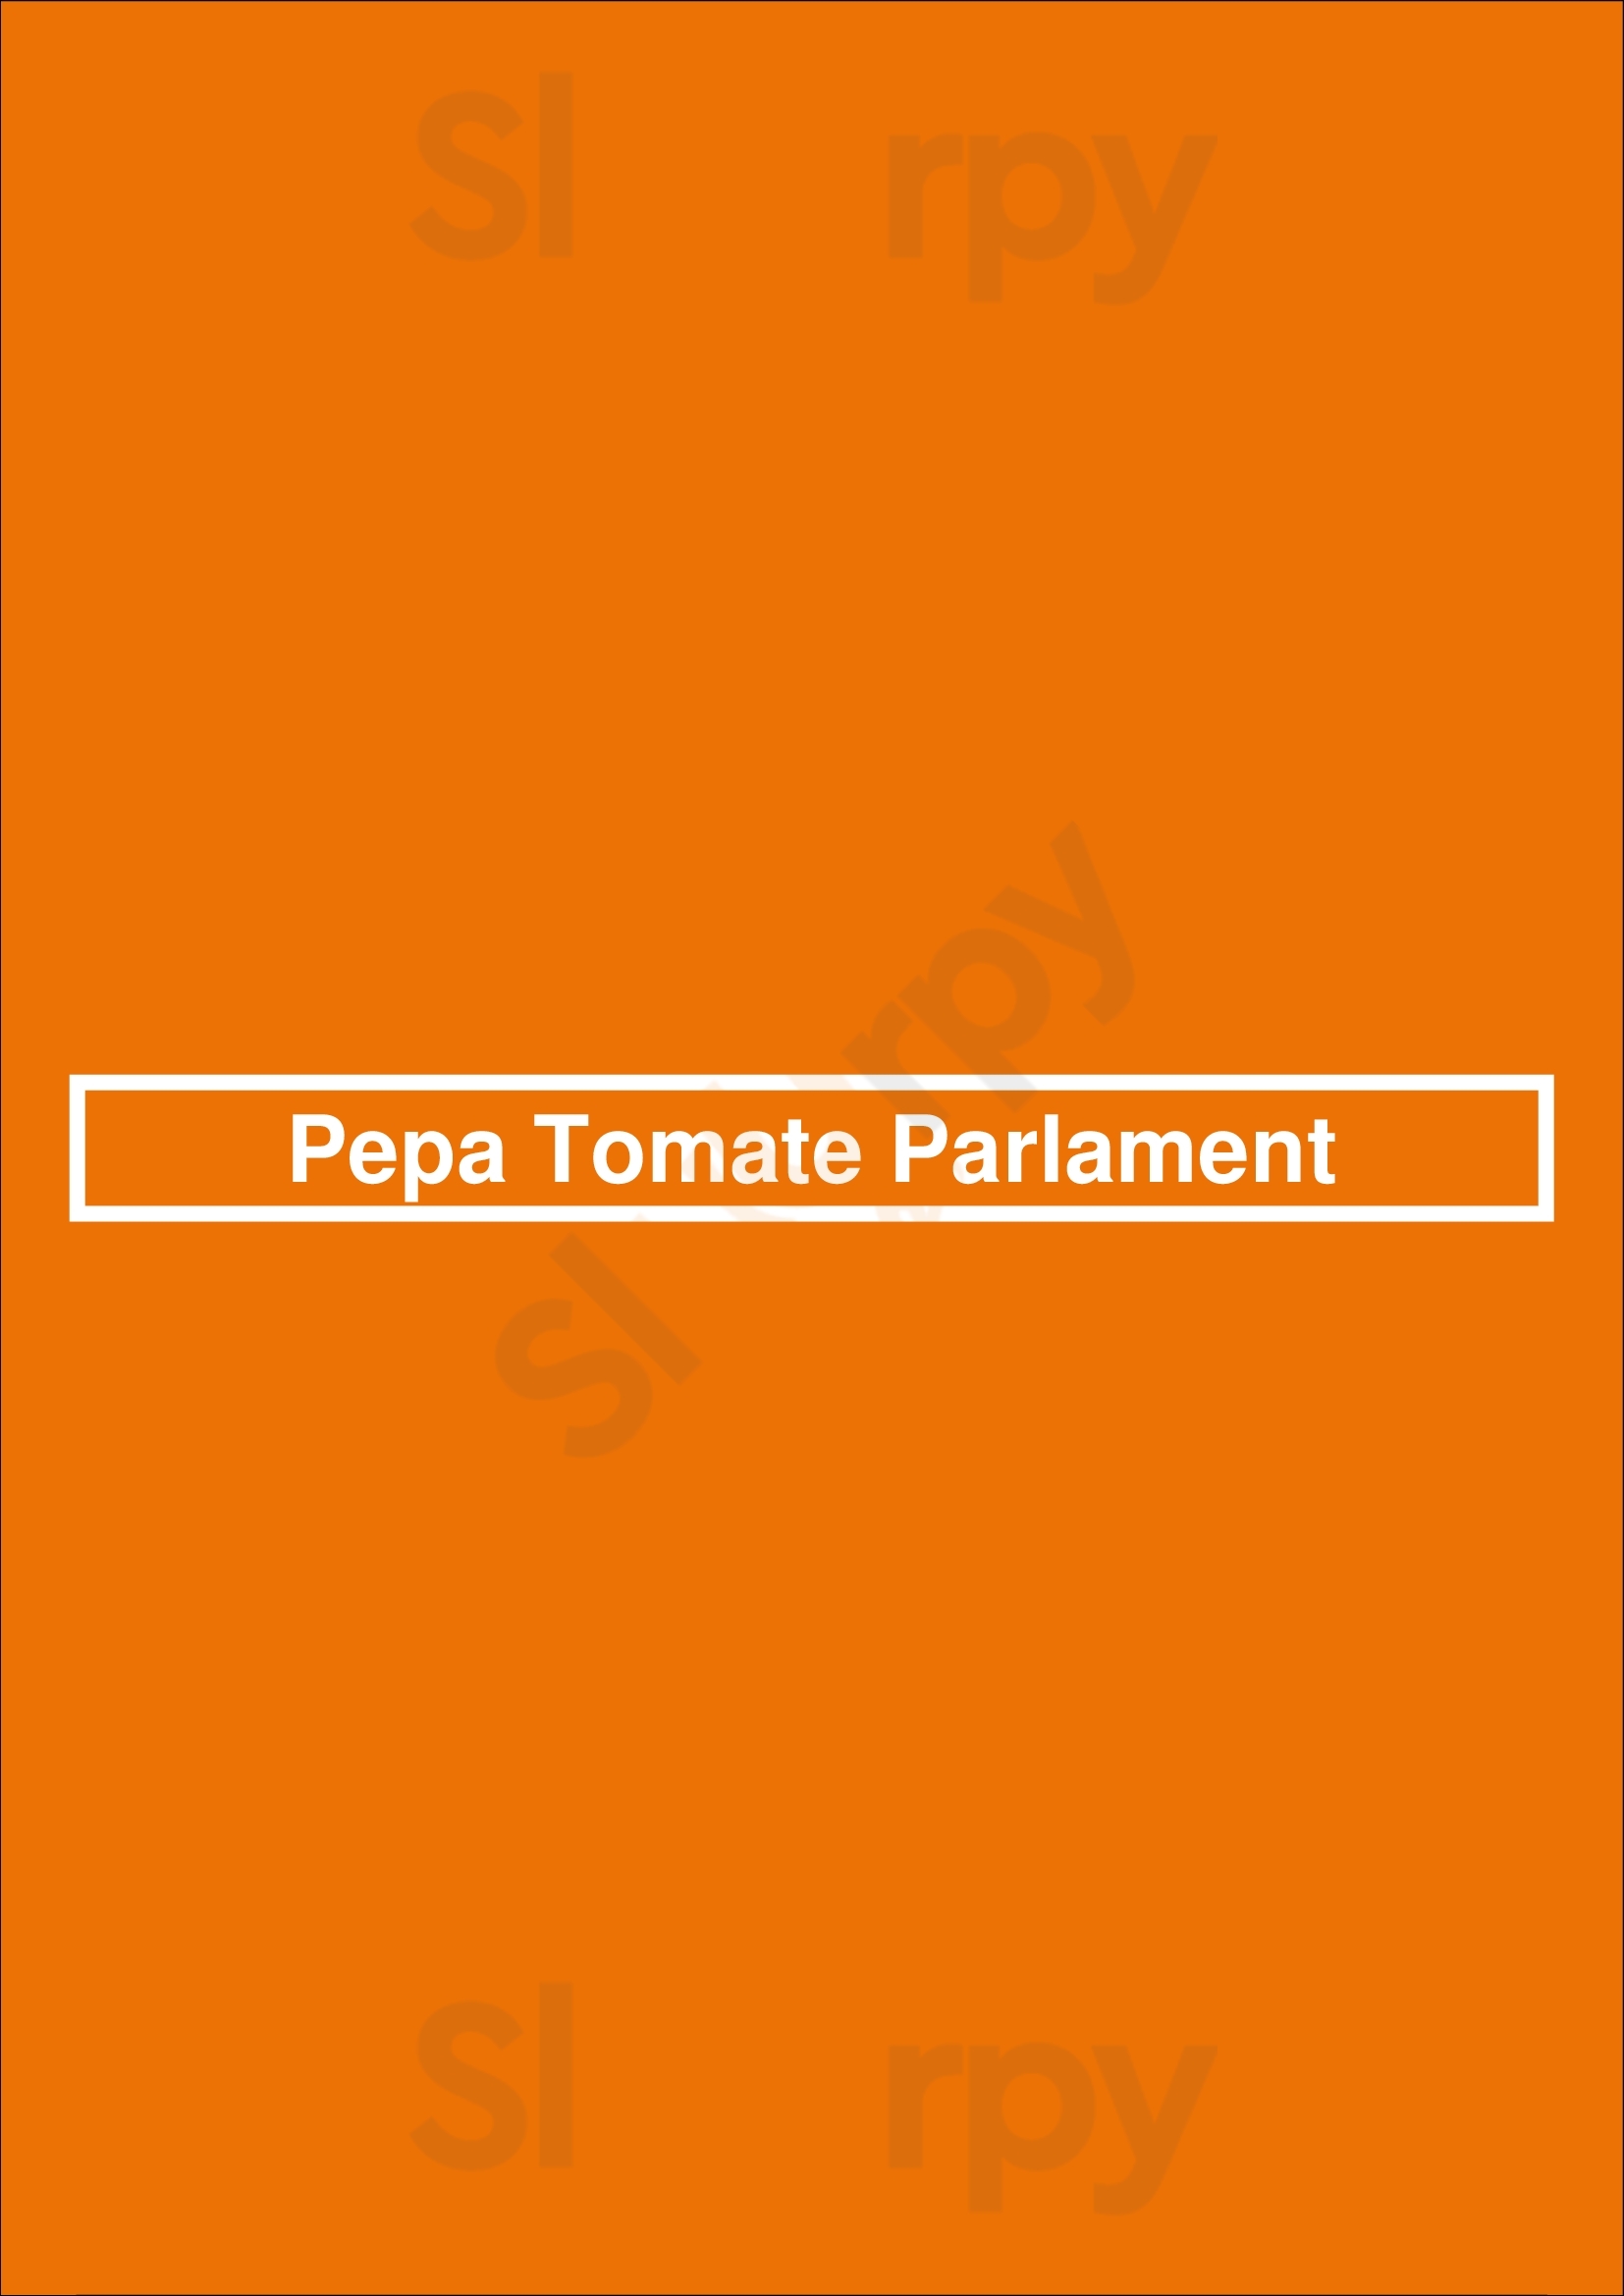 Pepa Tomate Parlament Barcelona Menu - 1